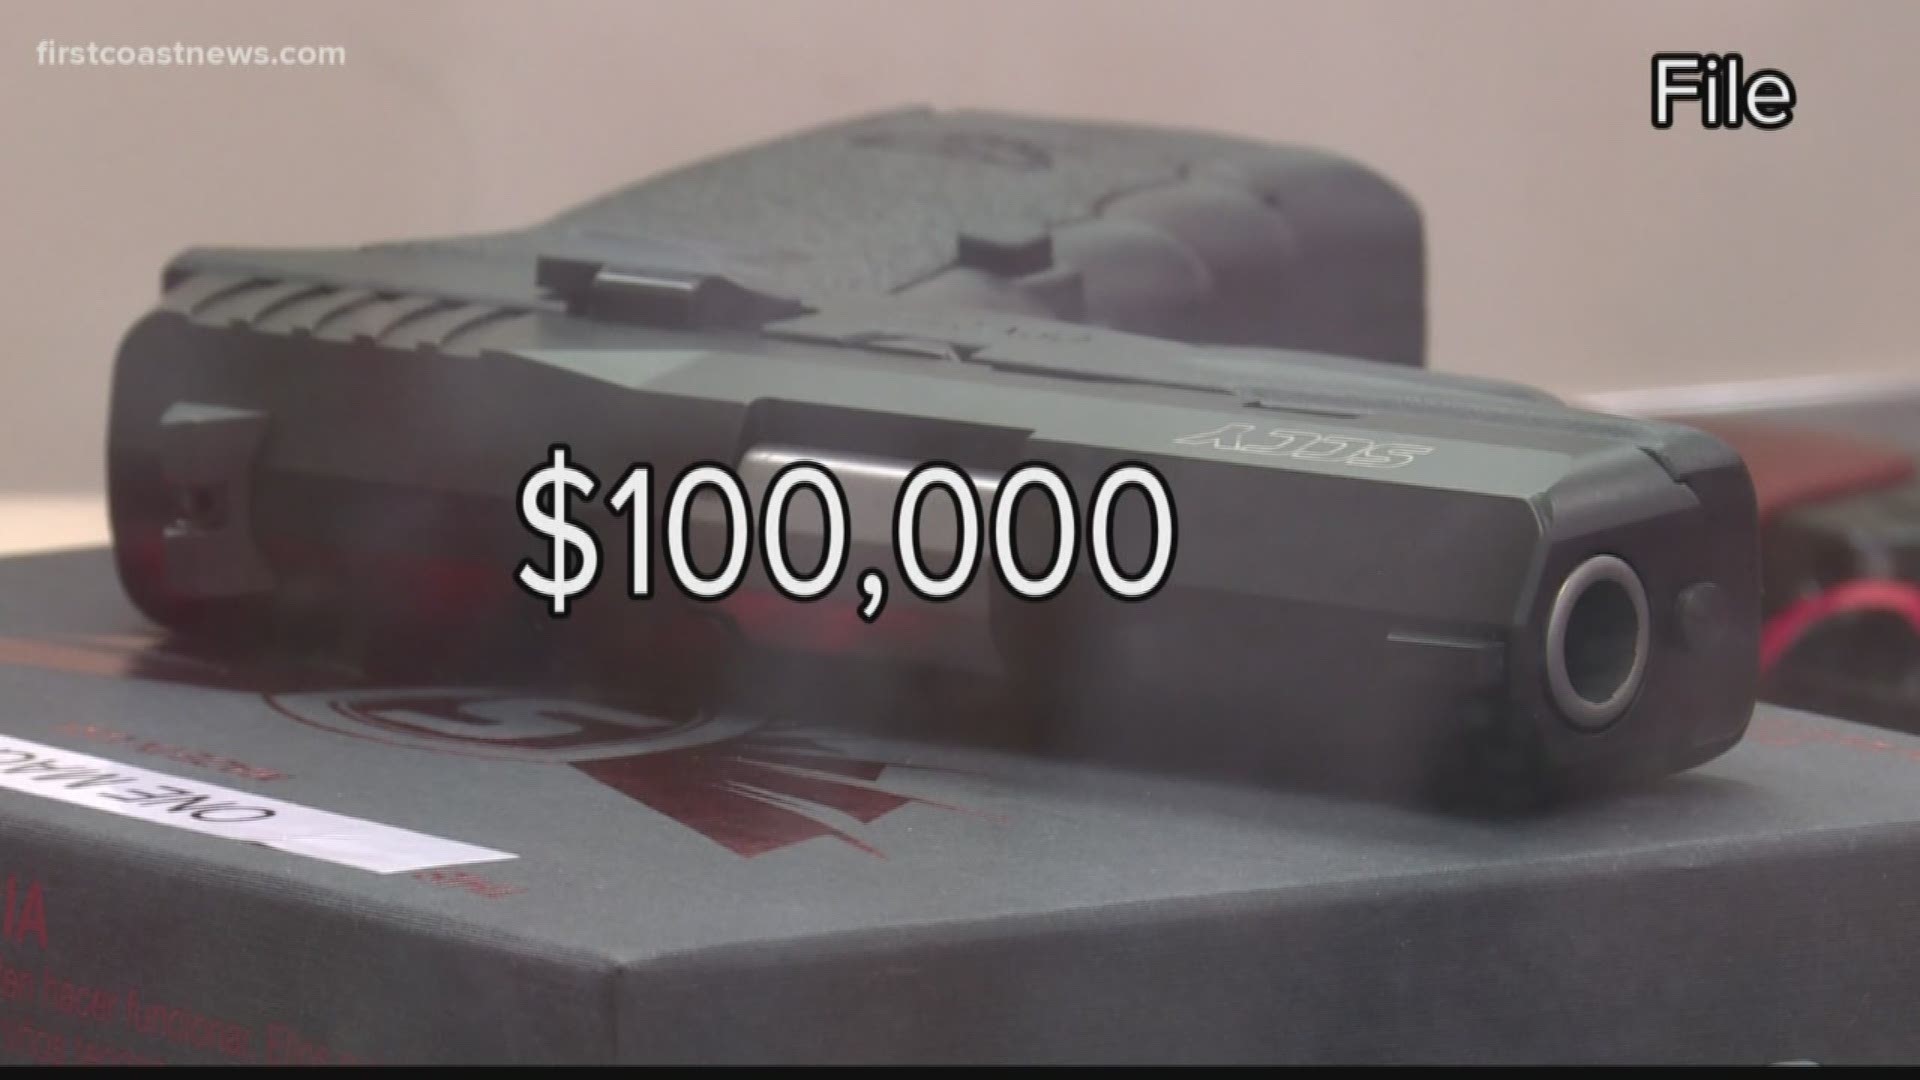 About $100,000-worth of guns were stolen from a gun store in Nassau County.